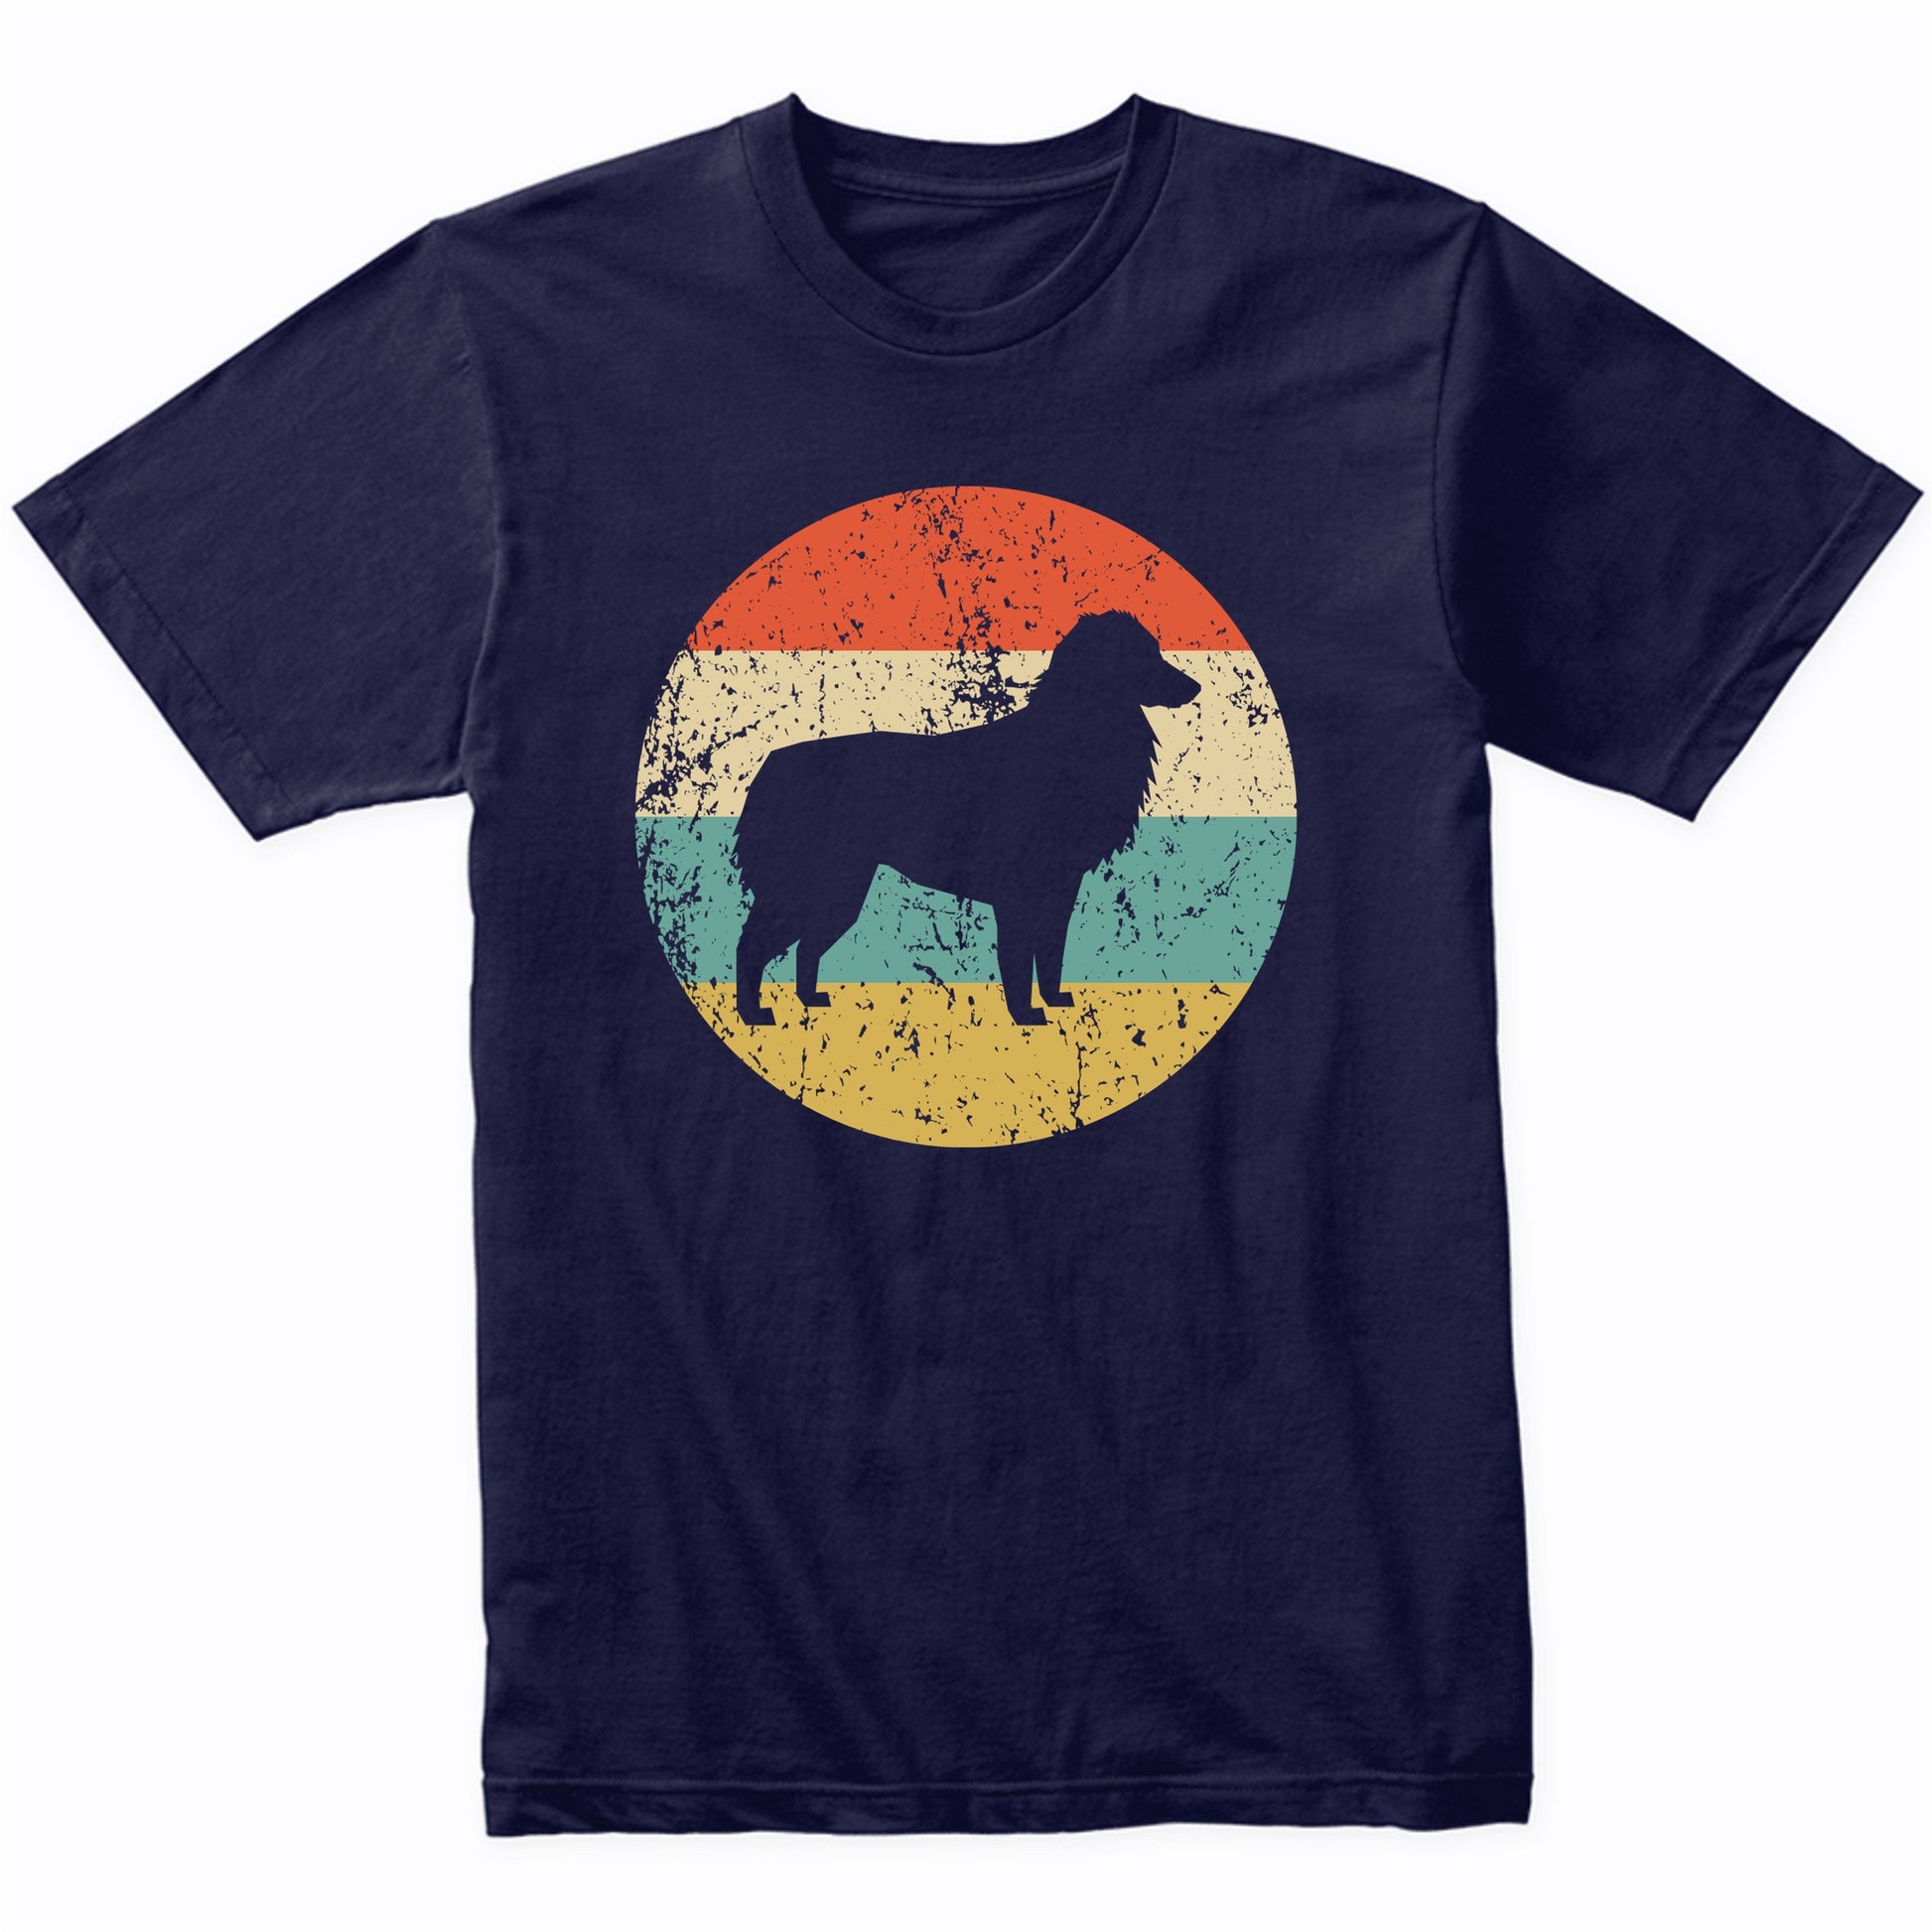 Australian Shepherd Shirt - Vintage Retro Aussie Dog T-Shirt